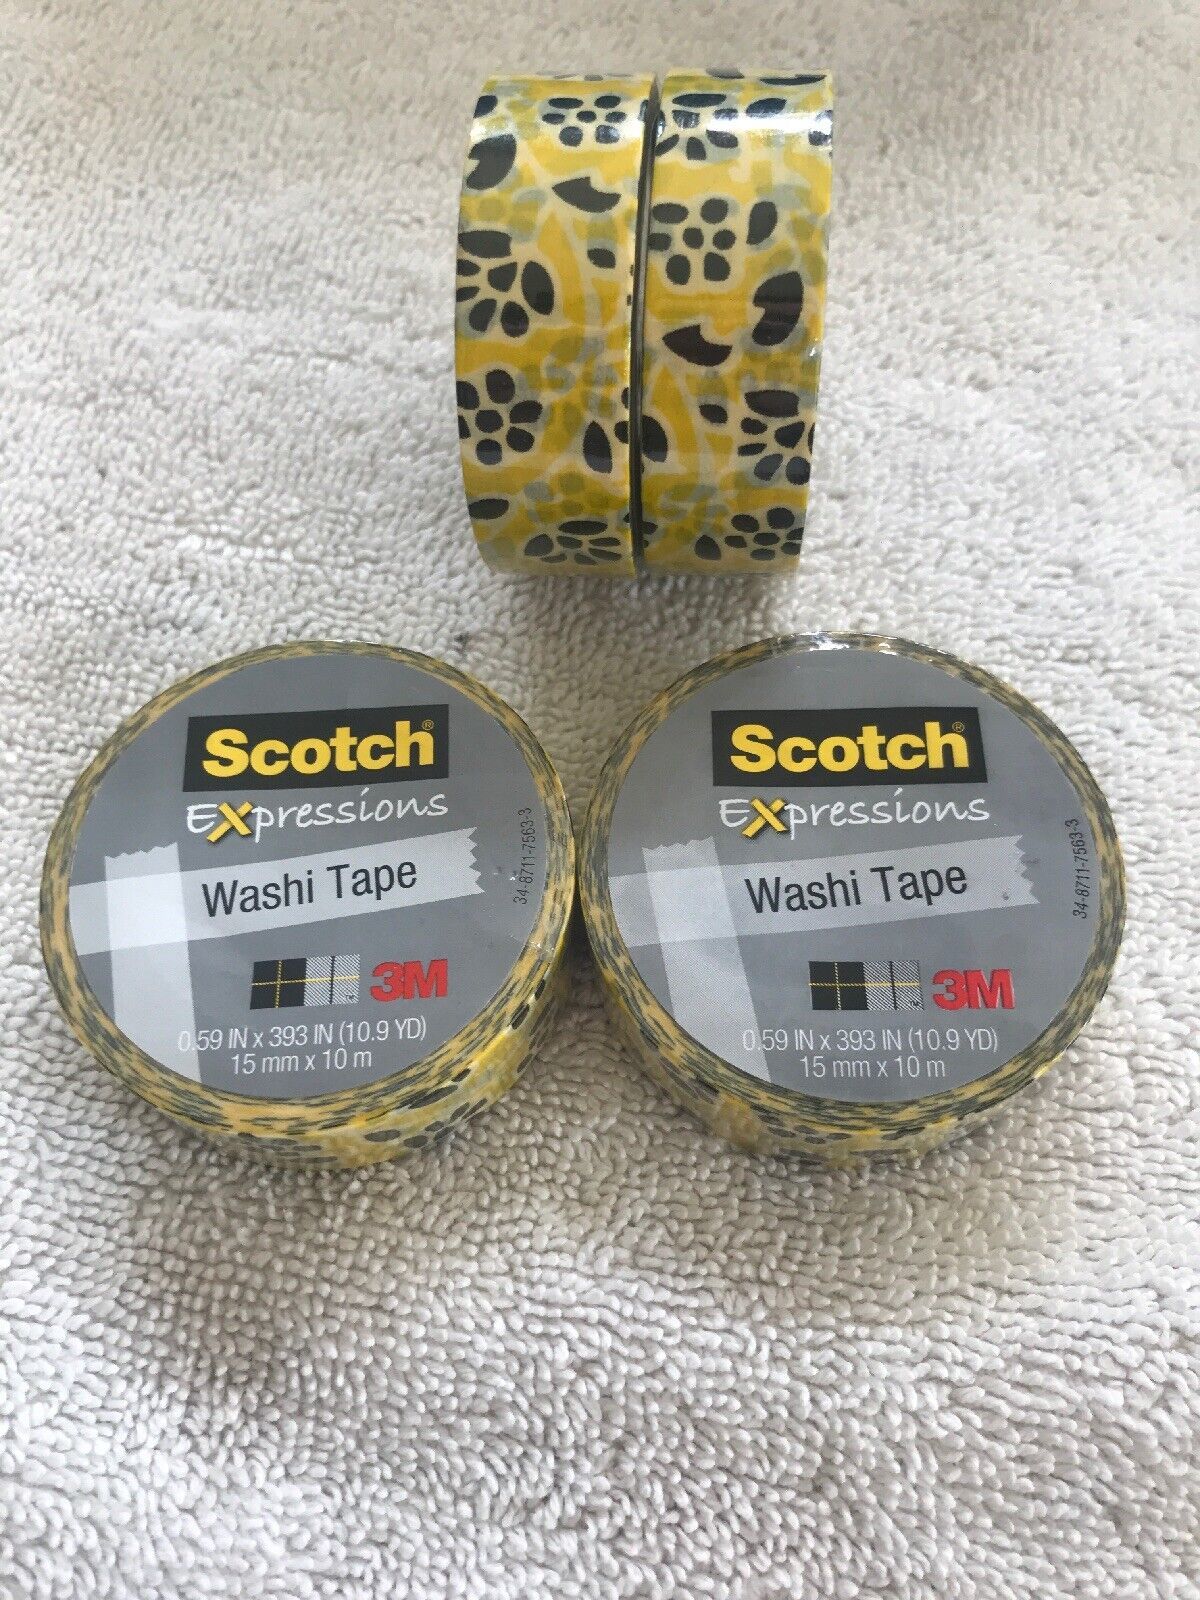 Scotch Expressions Washi Tape Multi-Pack, 10 Rolls